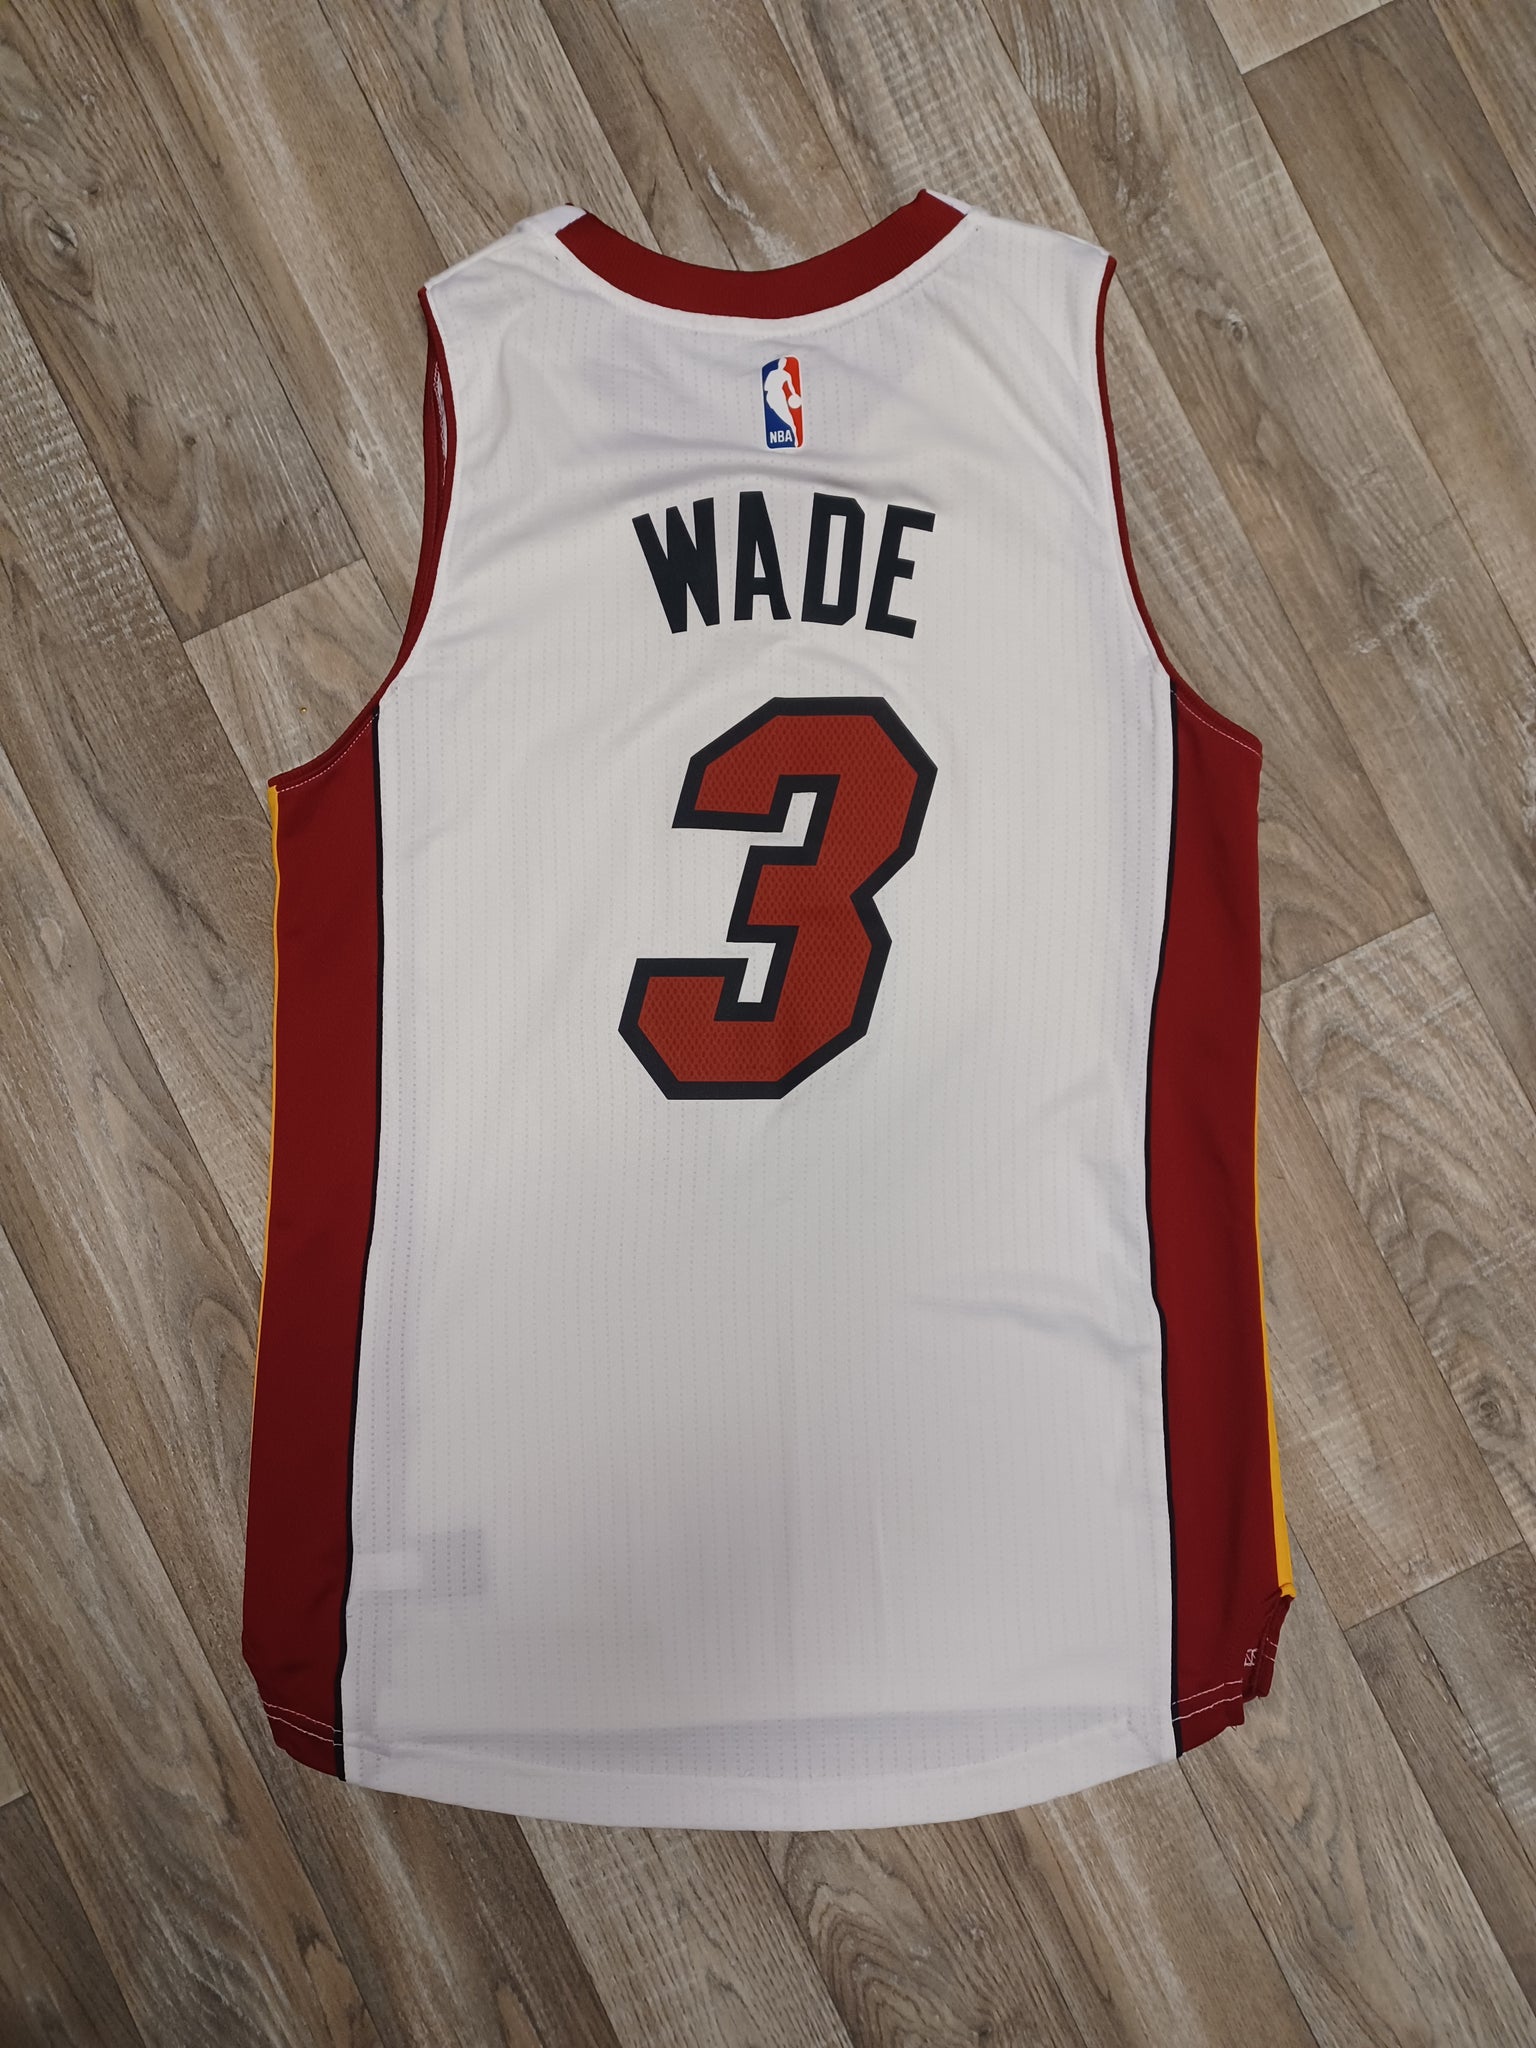 MIAMI HEAT DWYANE Wade Black Vice city ver. NBA Jersey stiched size S M L  XL XXL £49.99 - PicClick UK